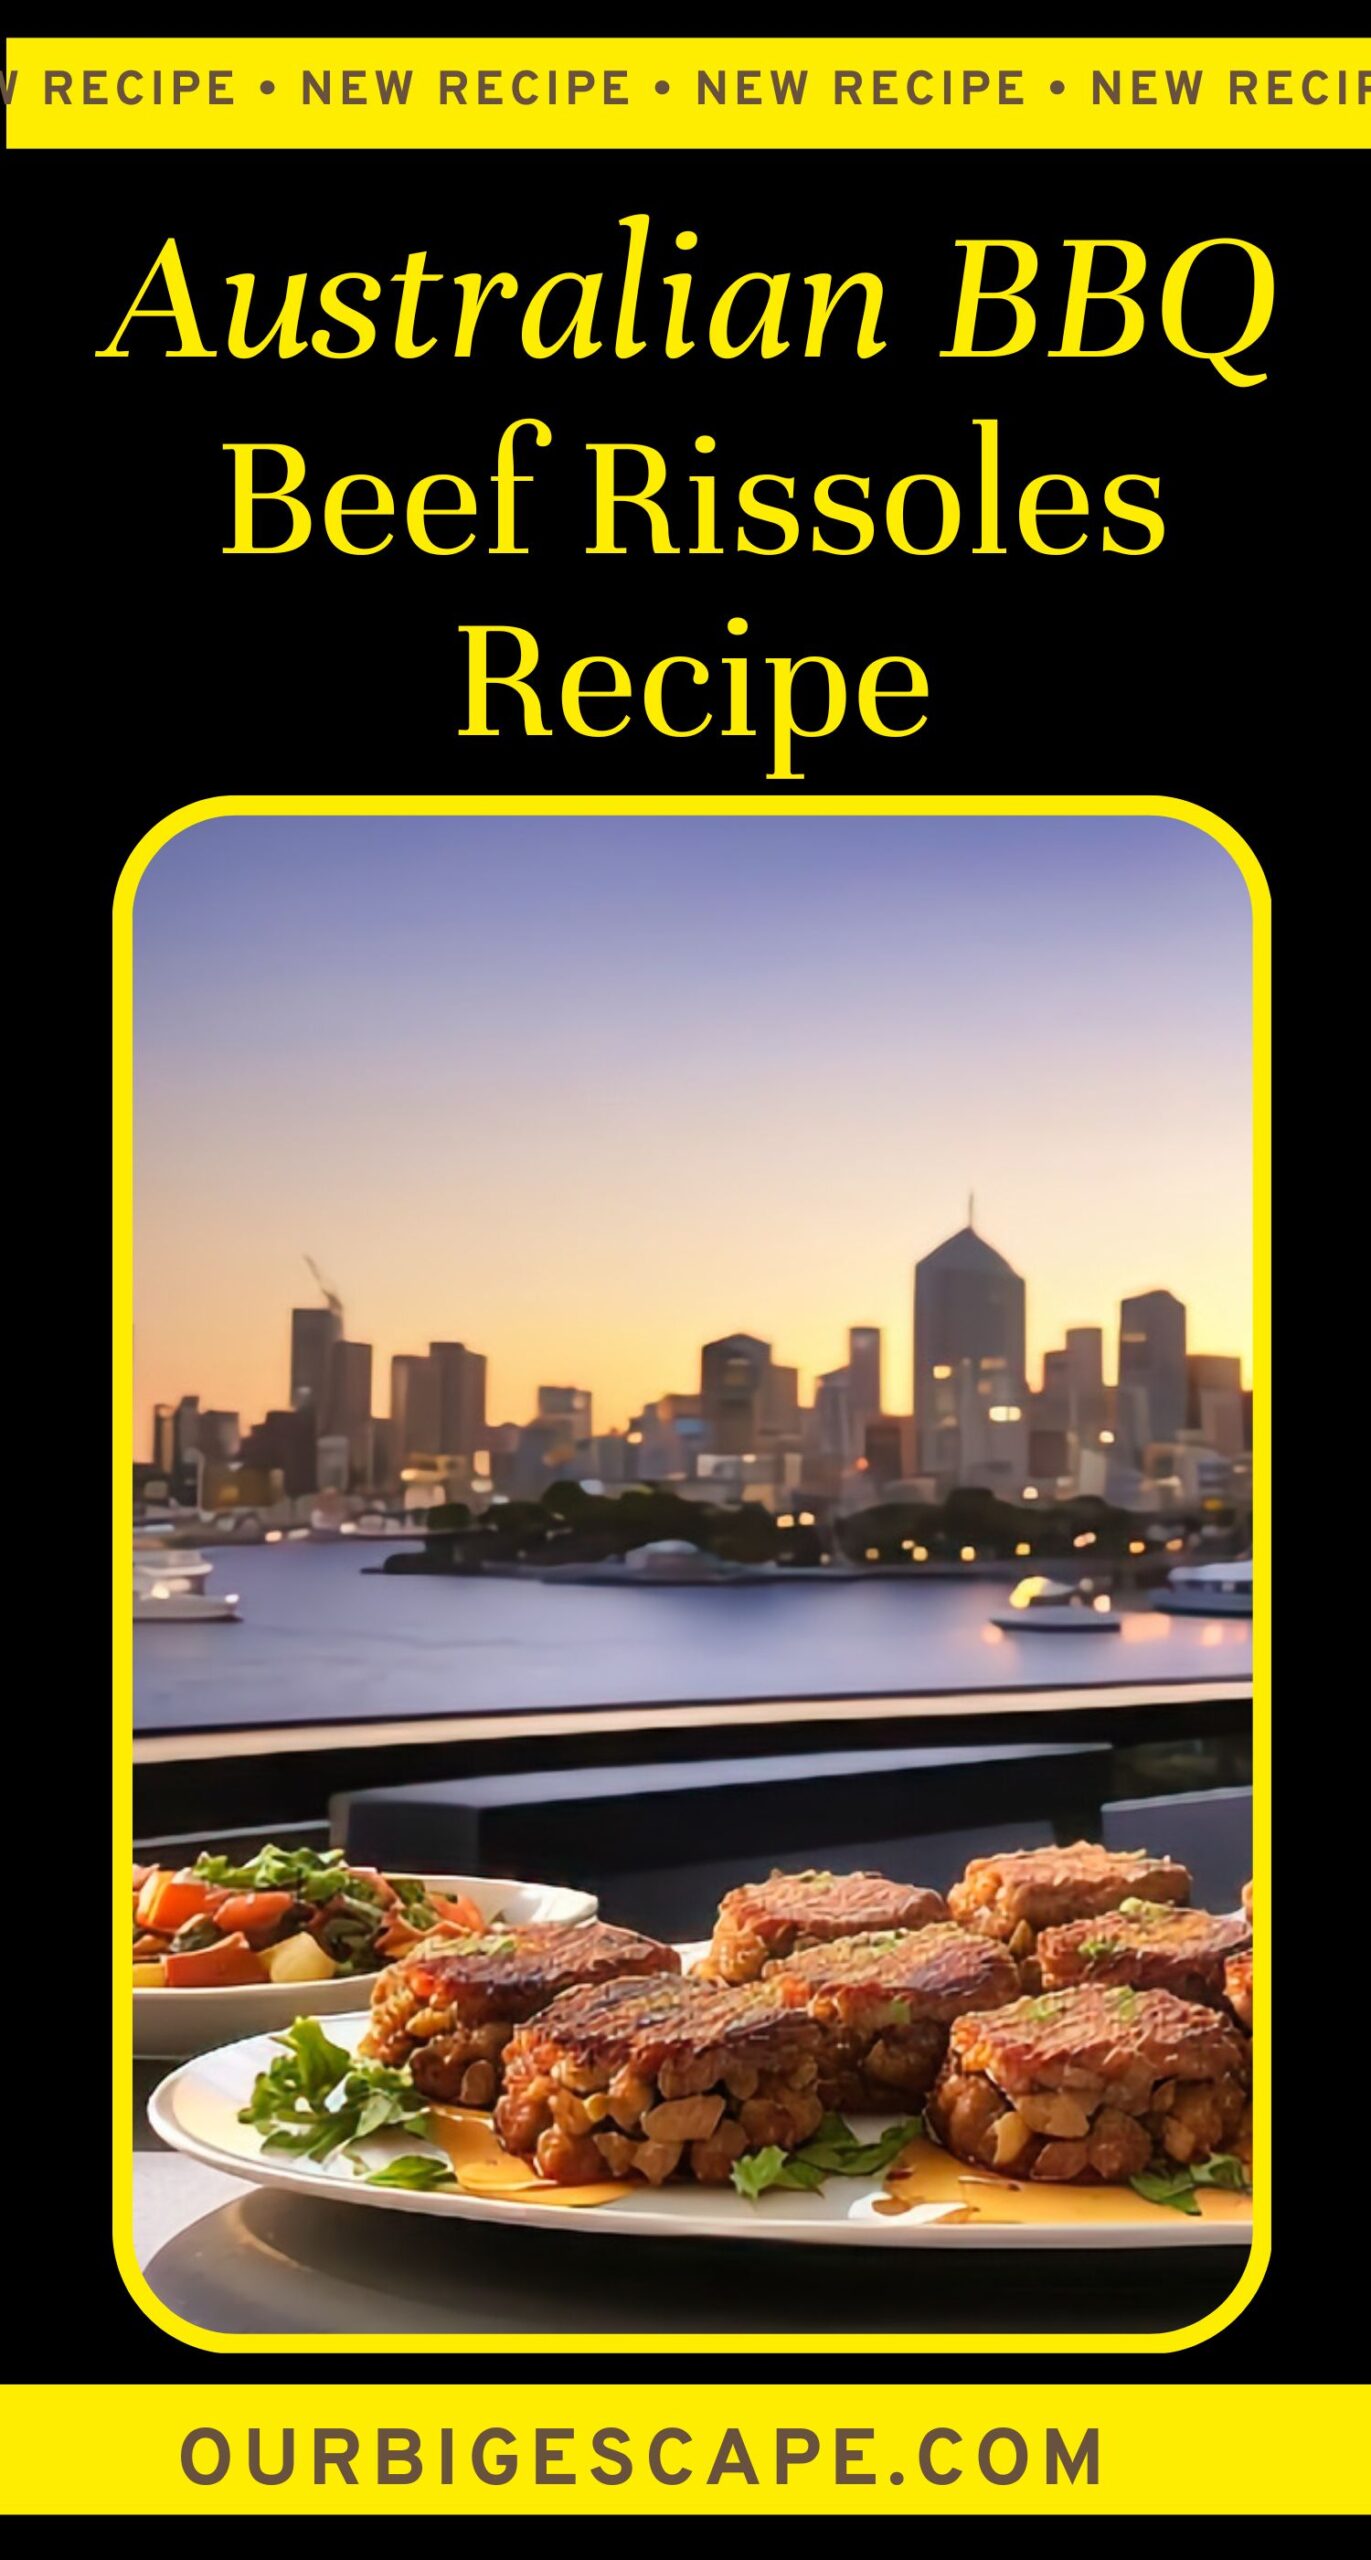 15. Australian BBQ Beef Rissoles Recipe